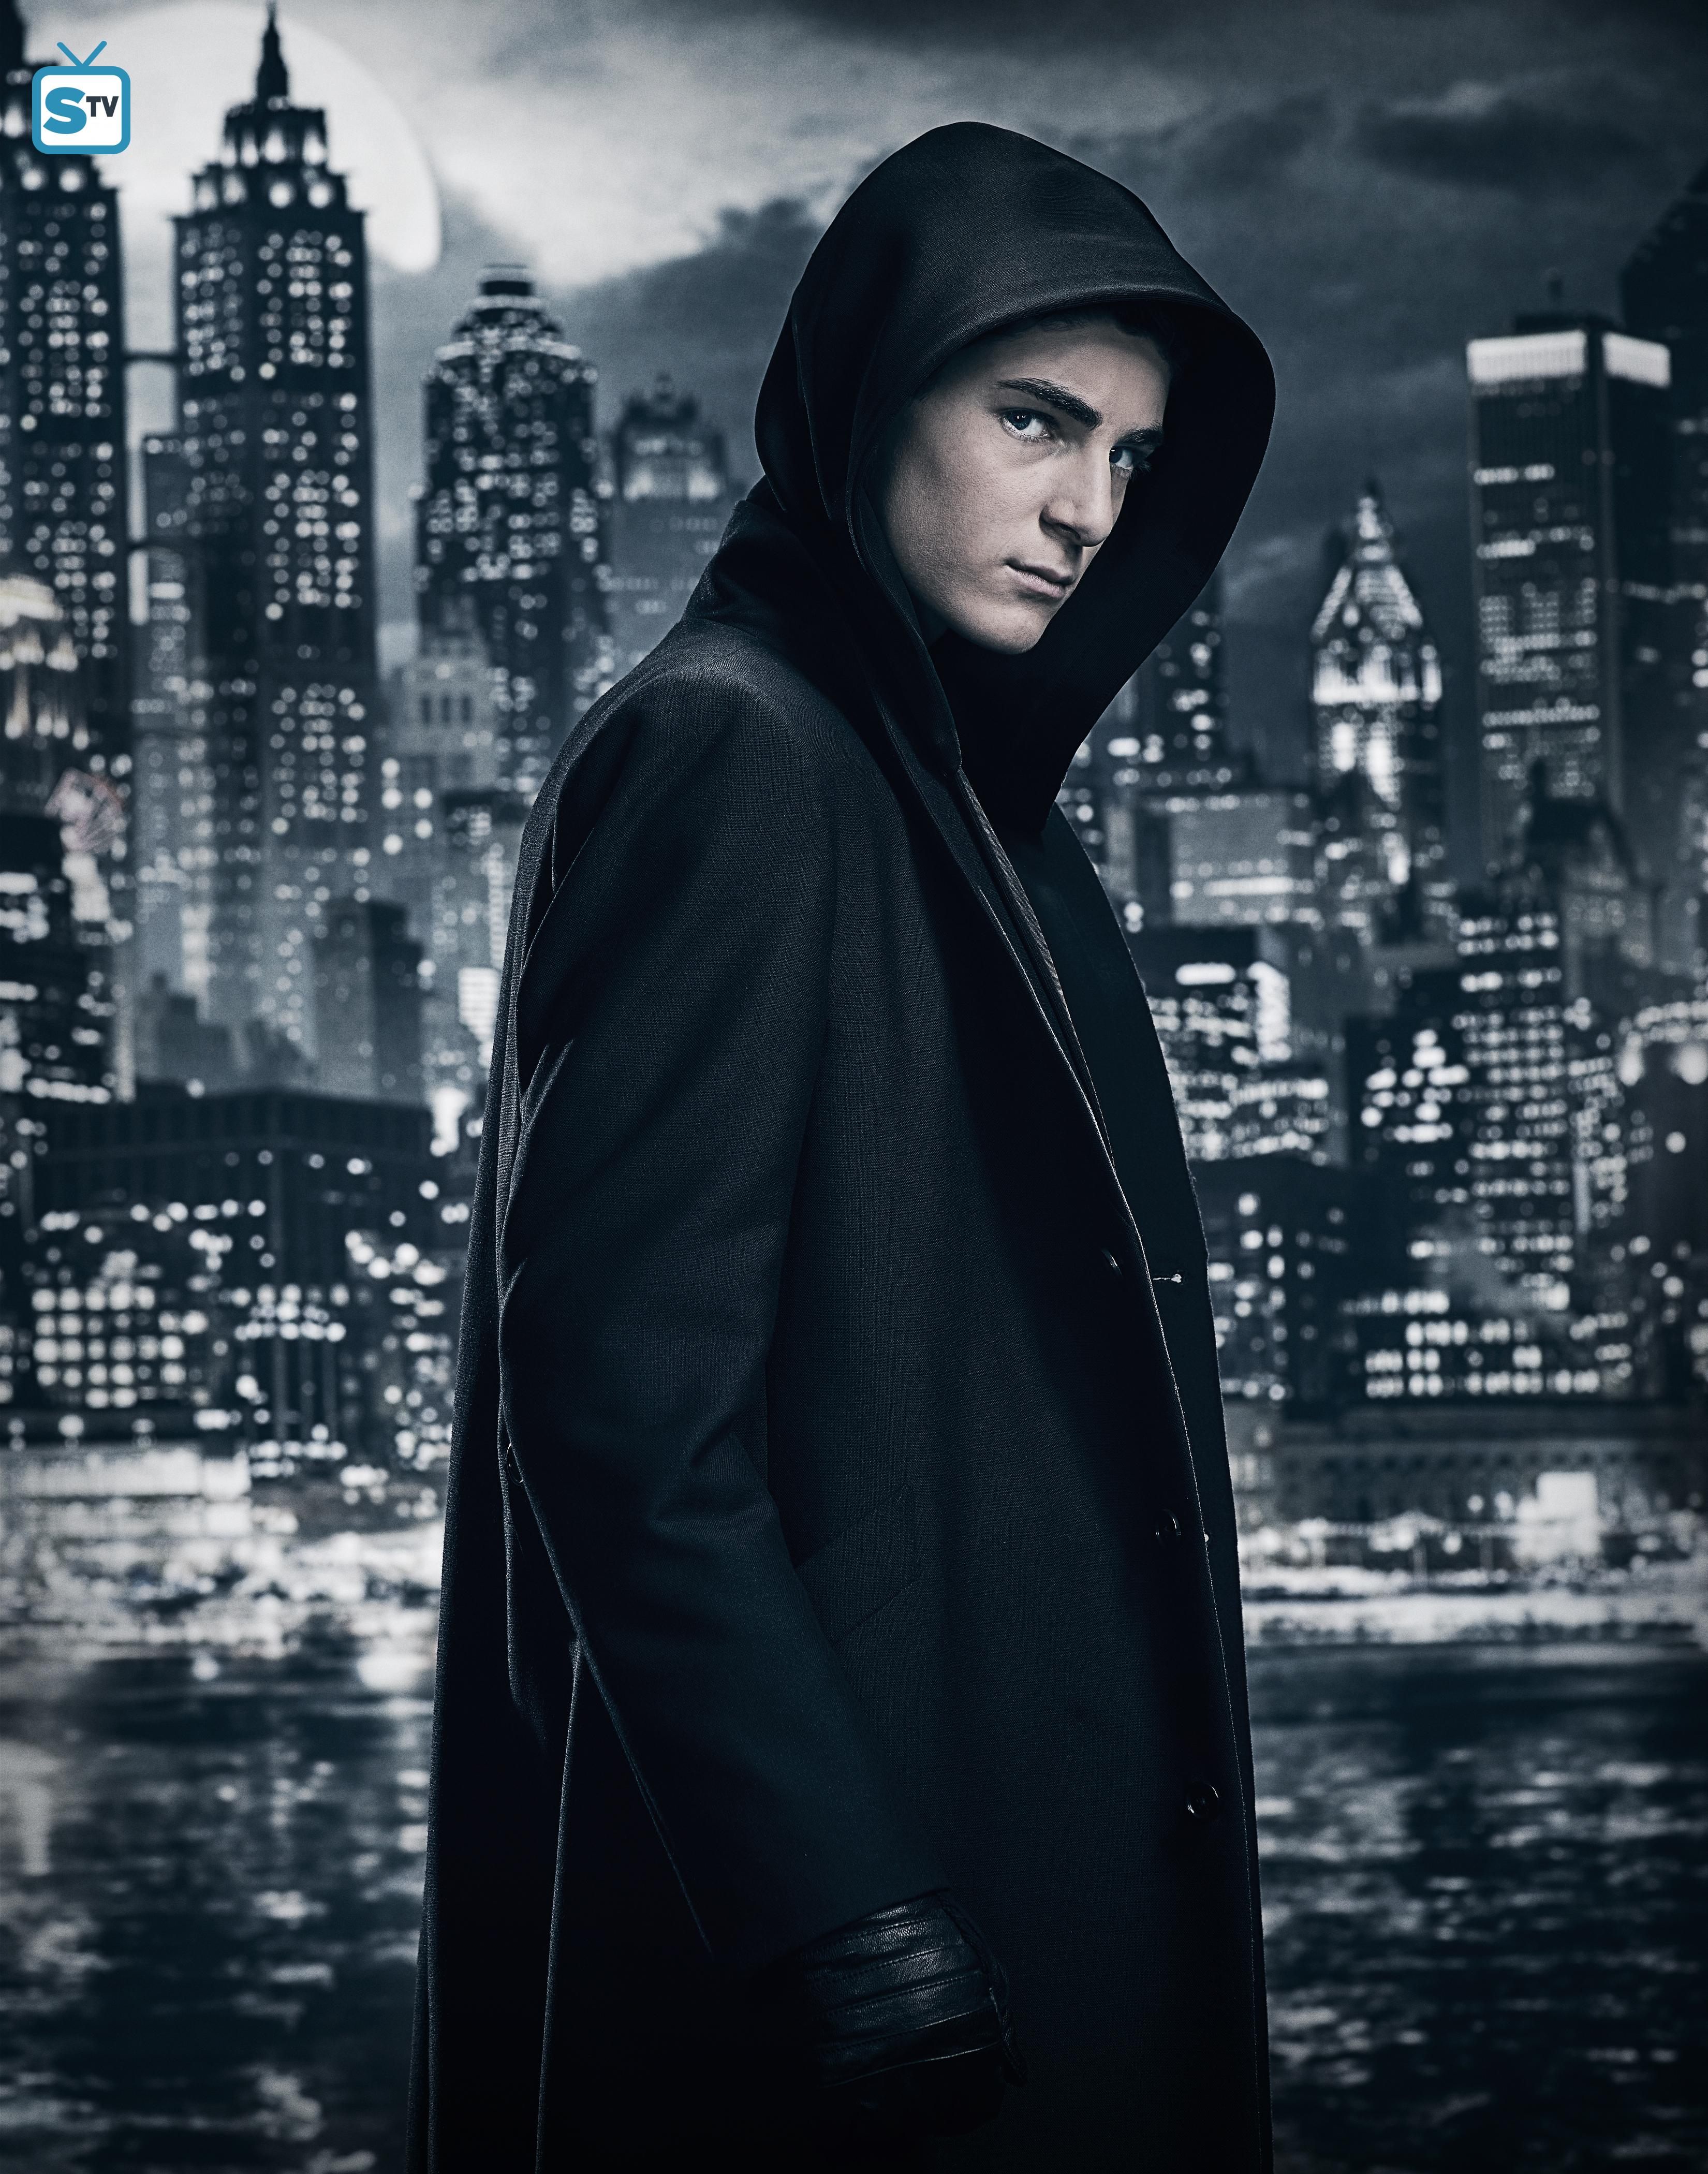 Gotham - Season 4 Portrait - Bruce Wayne - Gotham Photo (40717907) - Fanpop